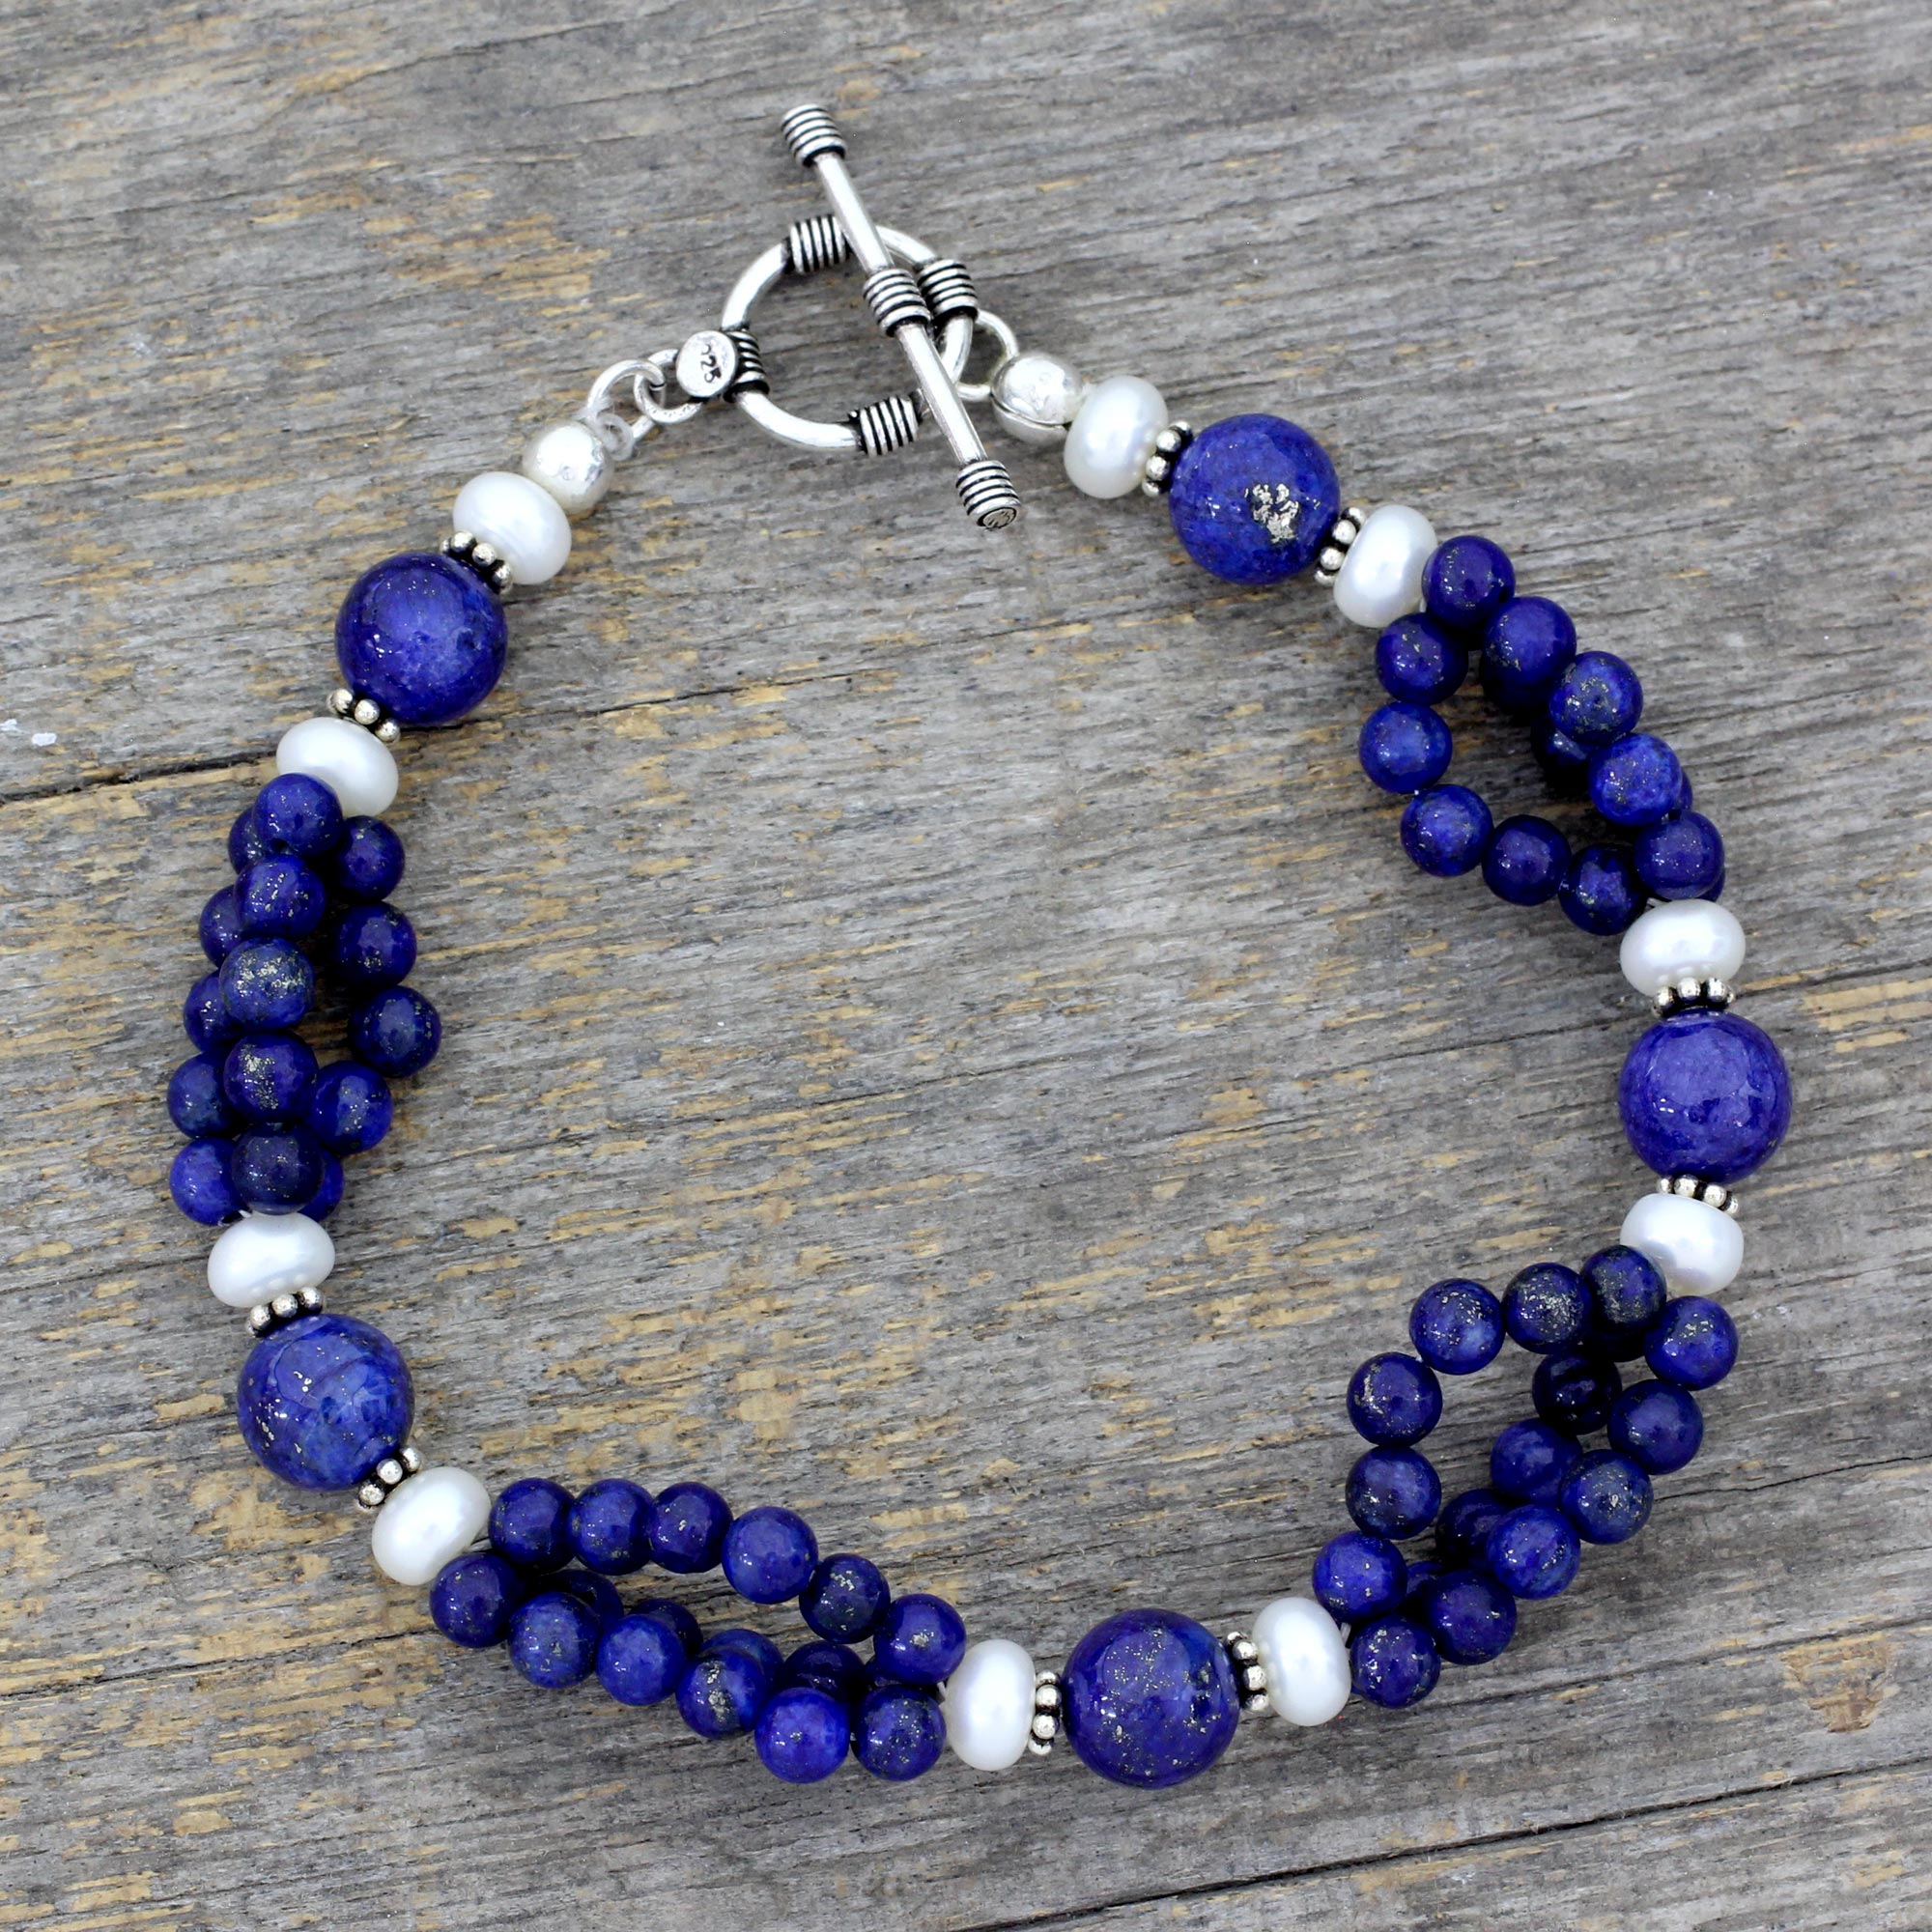 Handmade Beaded Bracelet with Lapis Lazuli and Pearls, 'Ocean's Treasure '